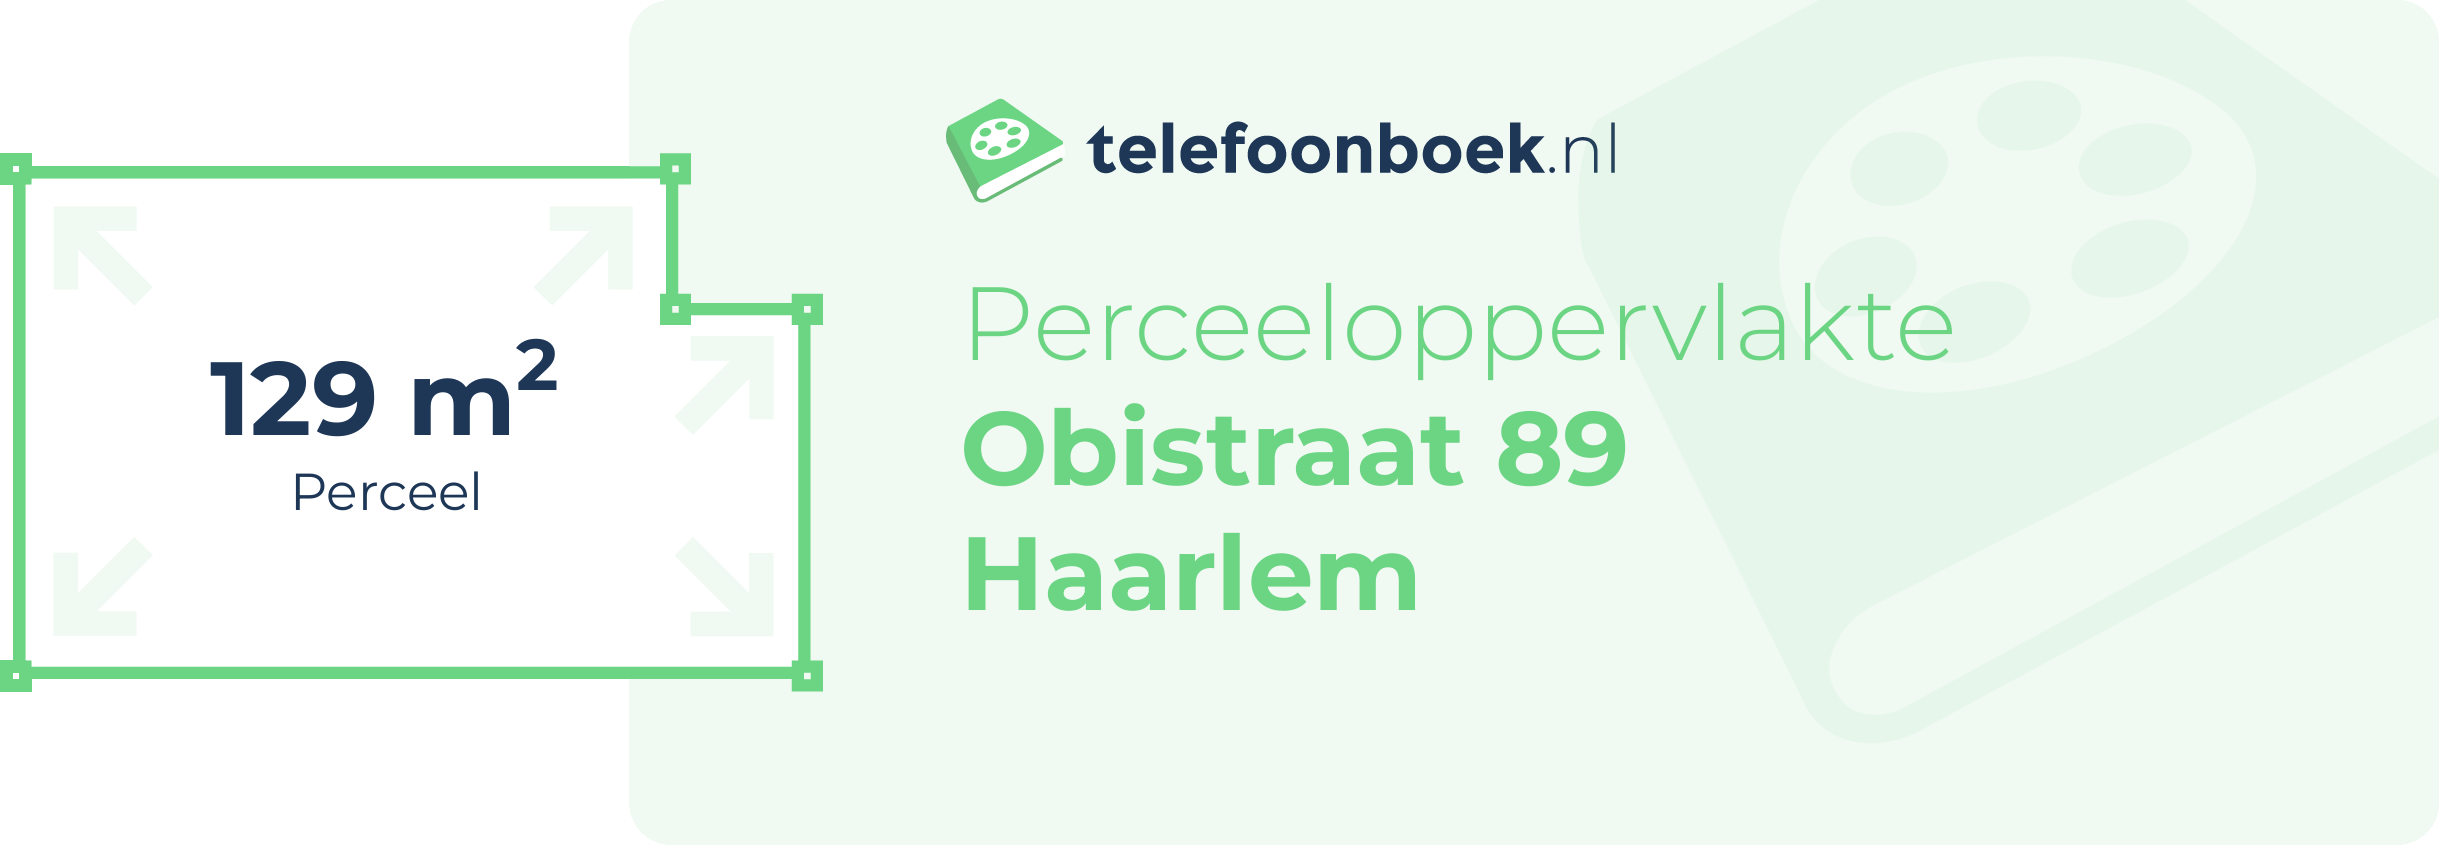 Perceeloppervlakte Obistraat 89 Haarlem